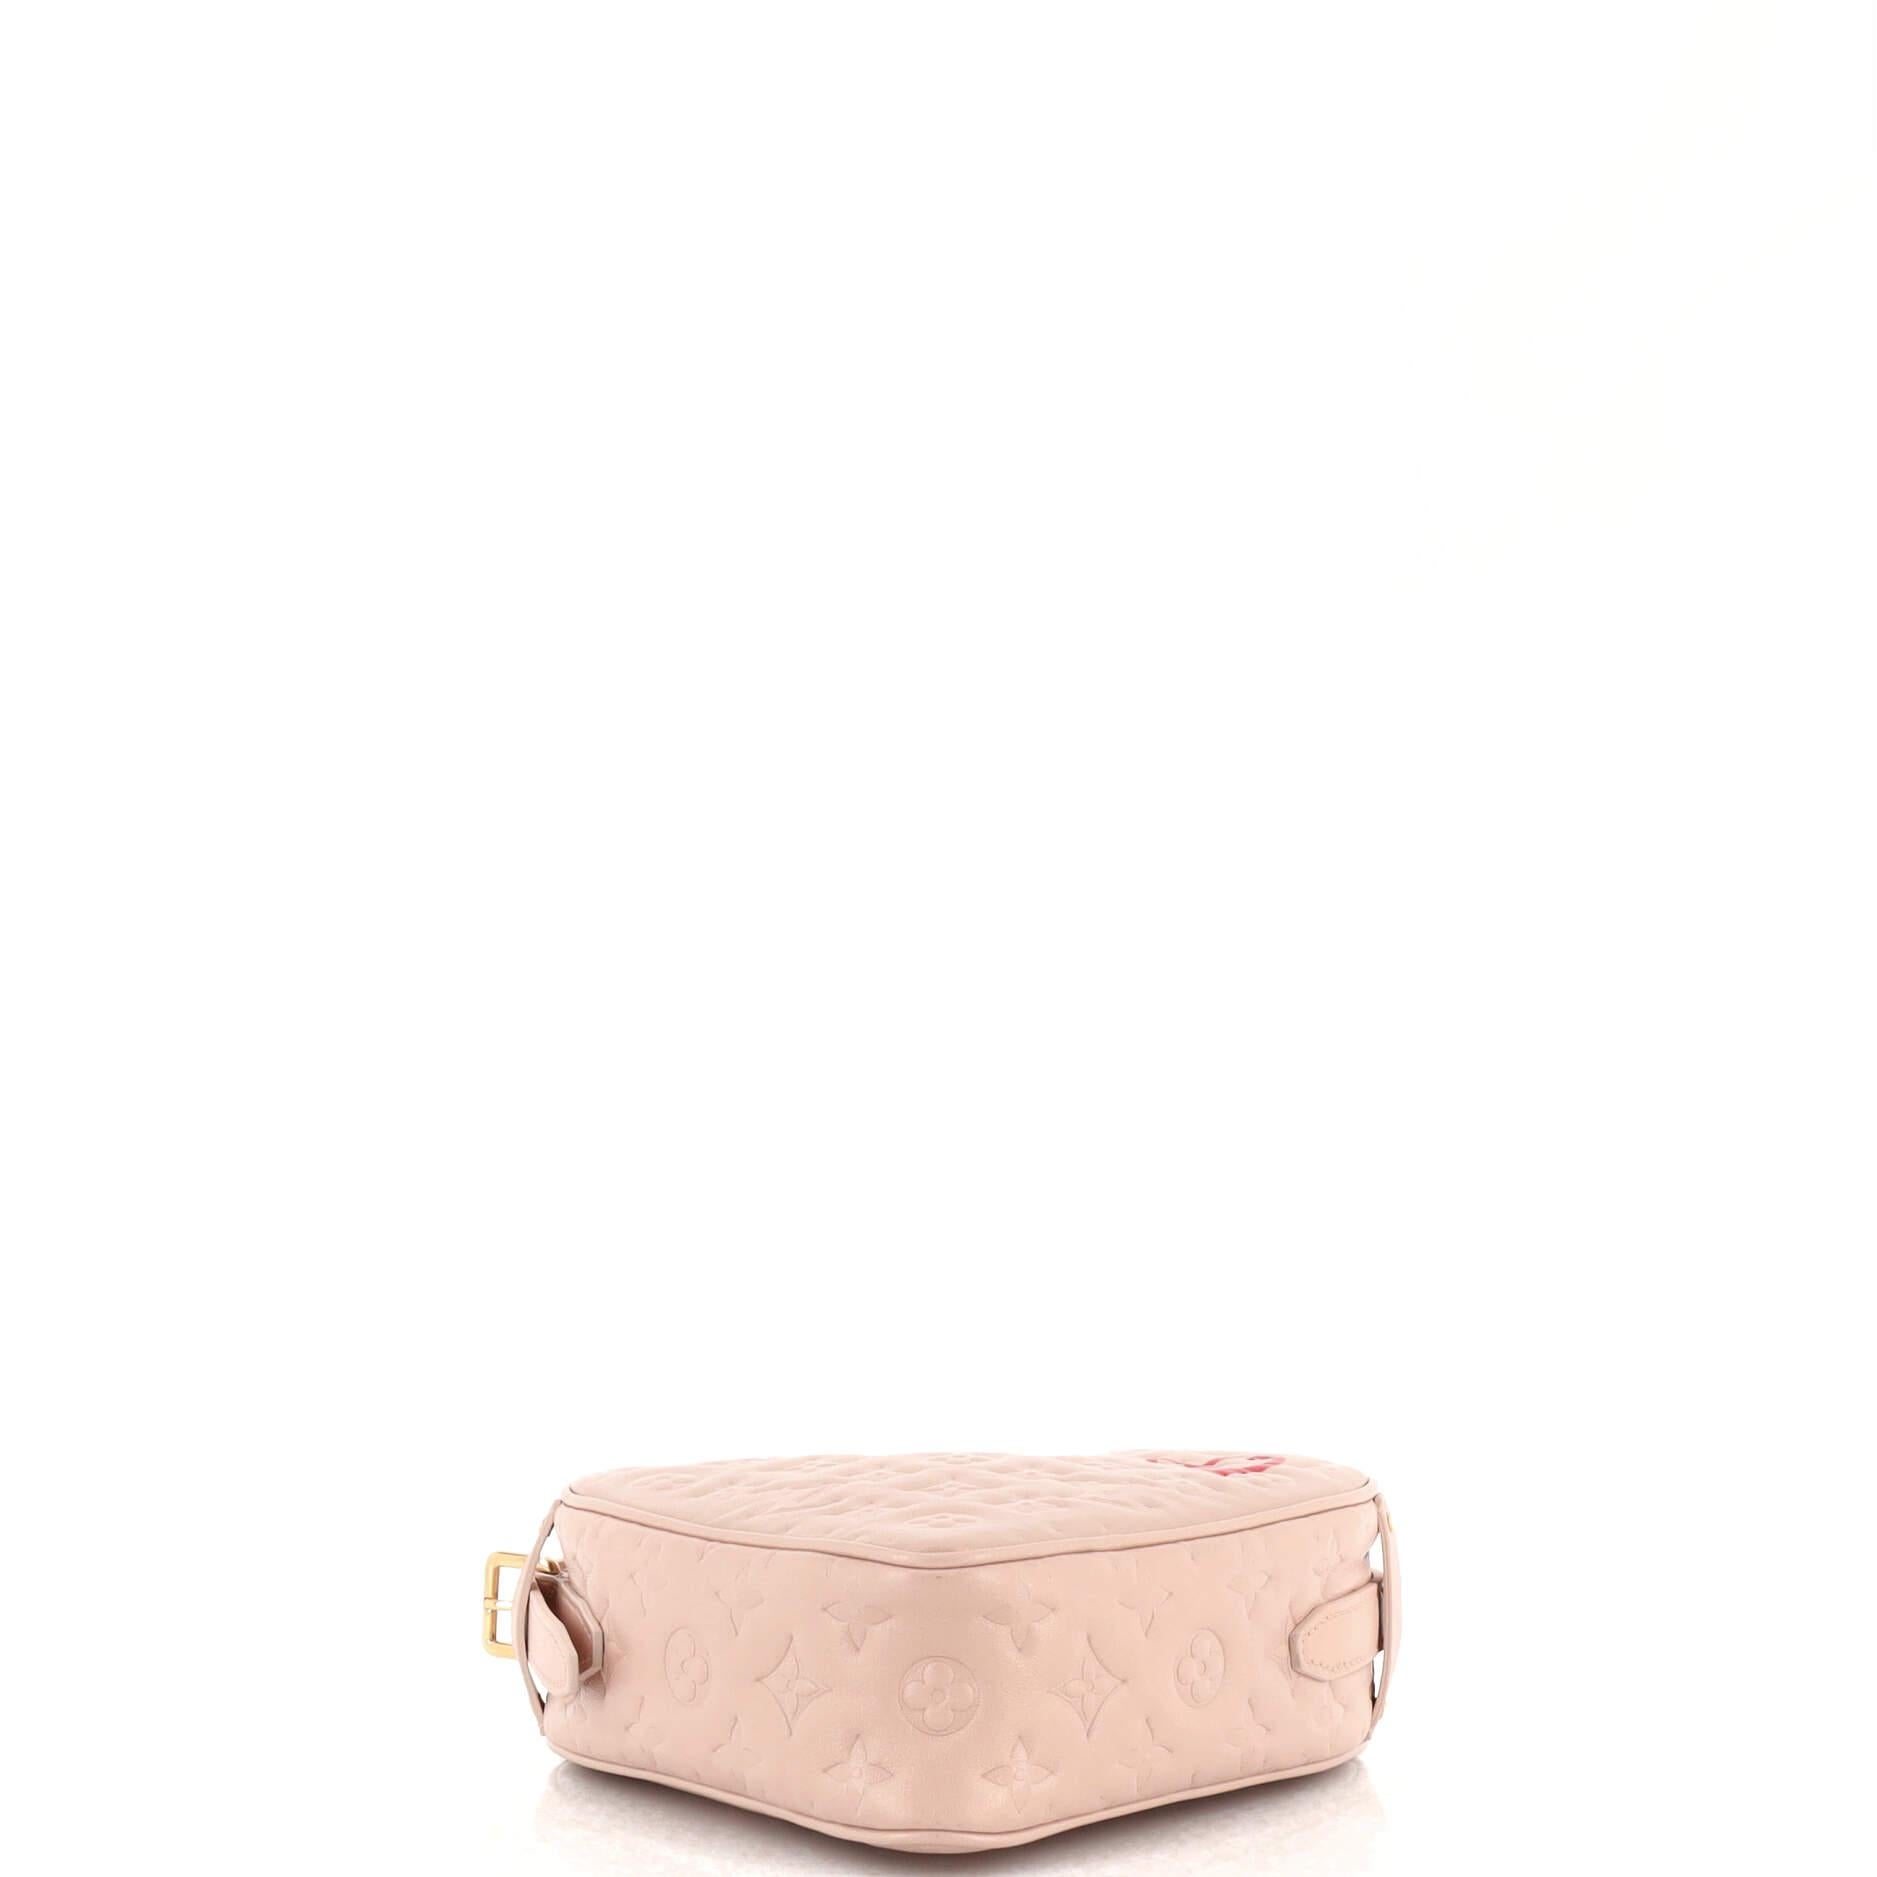 Women's or Men's Louis Vuitton Coeur Handbag Limited Edition Fall in Love Monogram Embossed